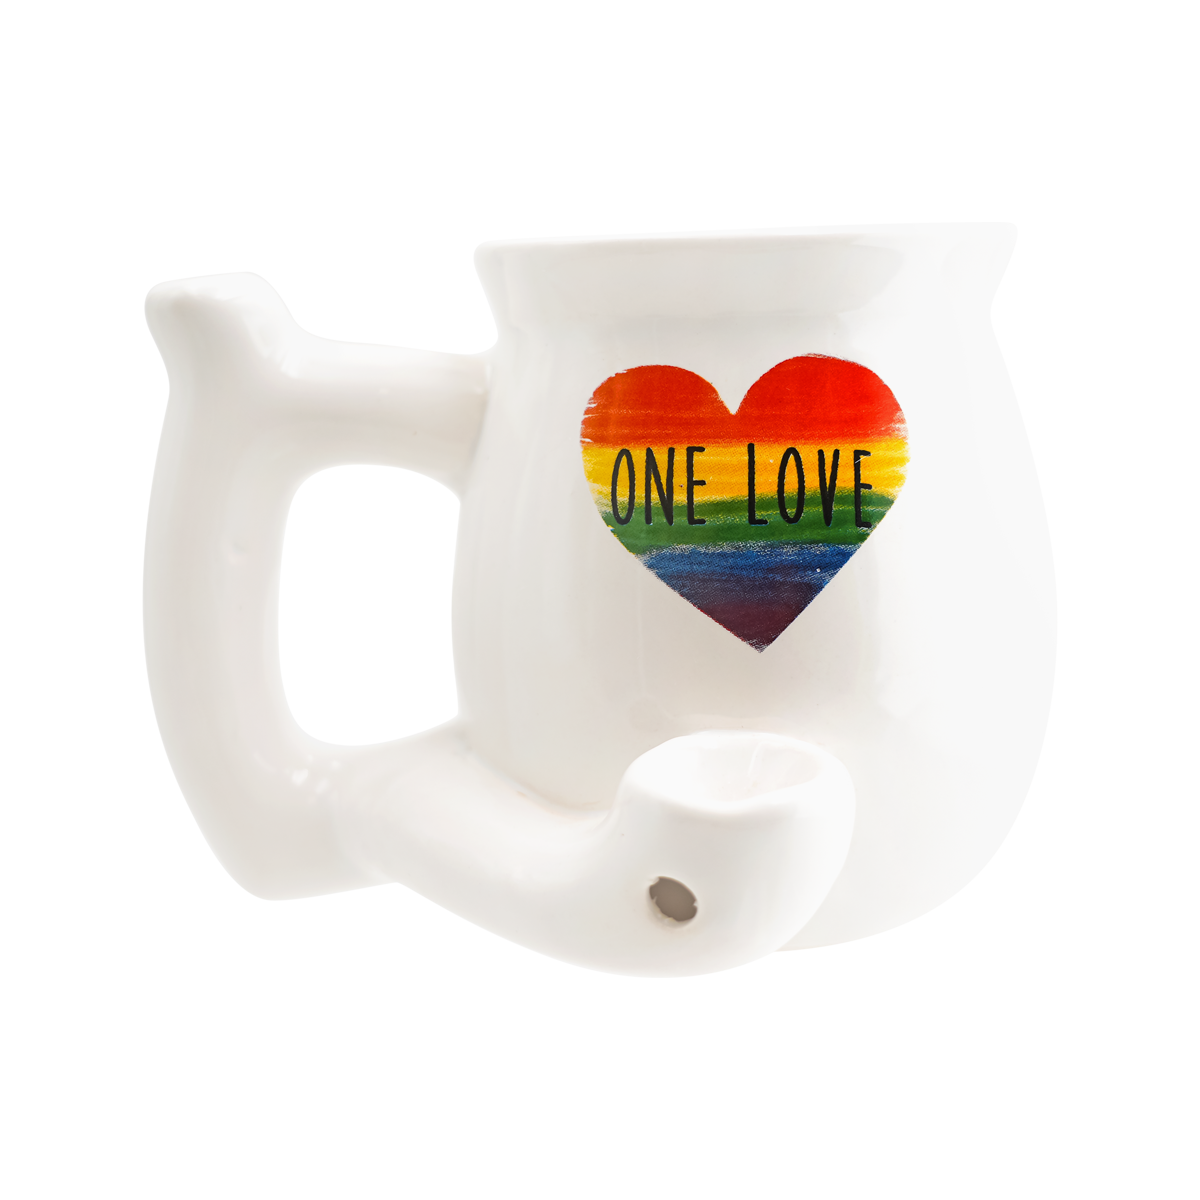 " One Love" Mug Pipe